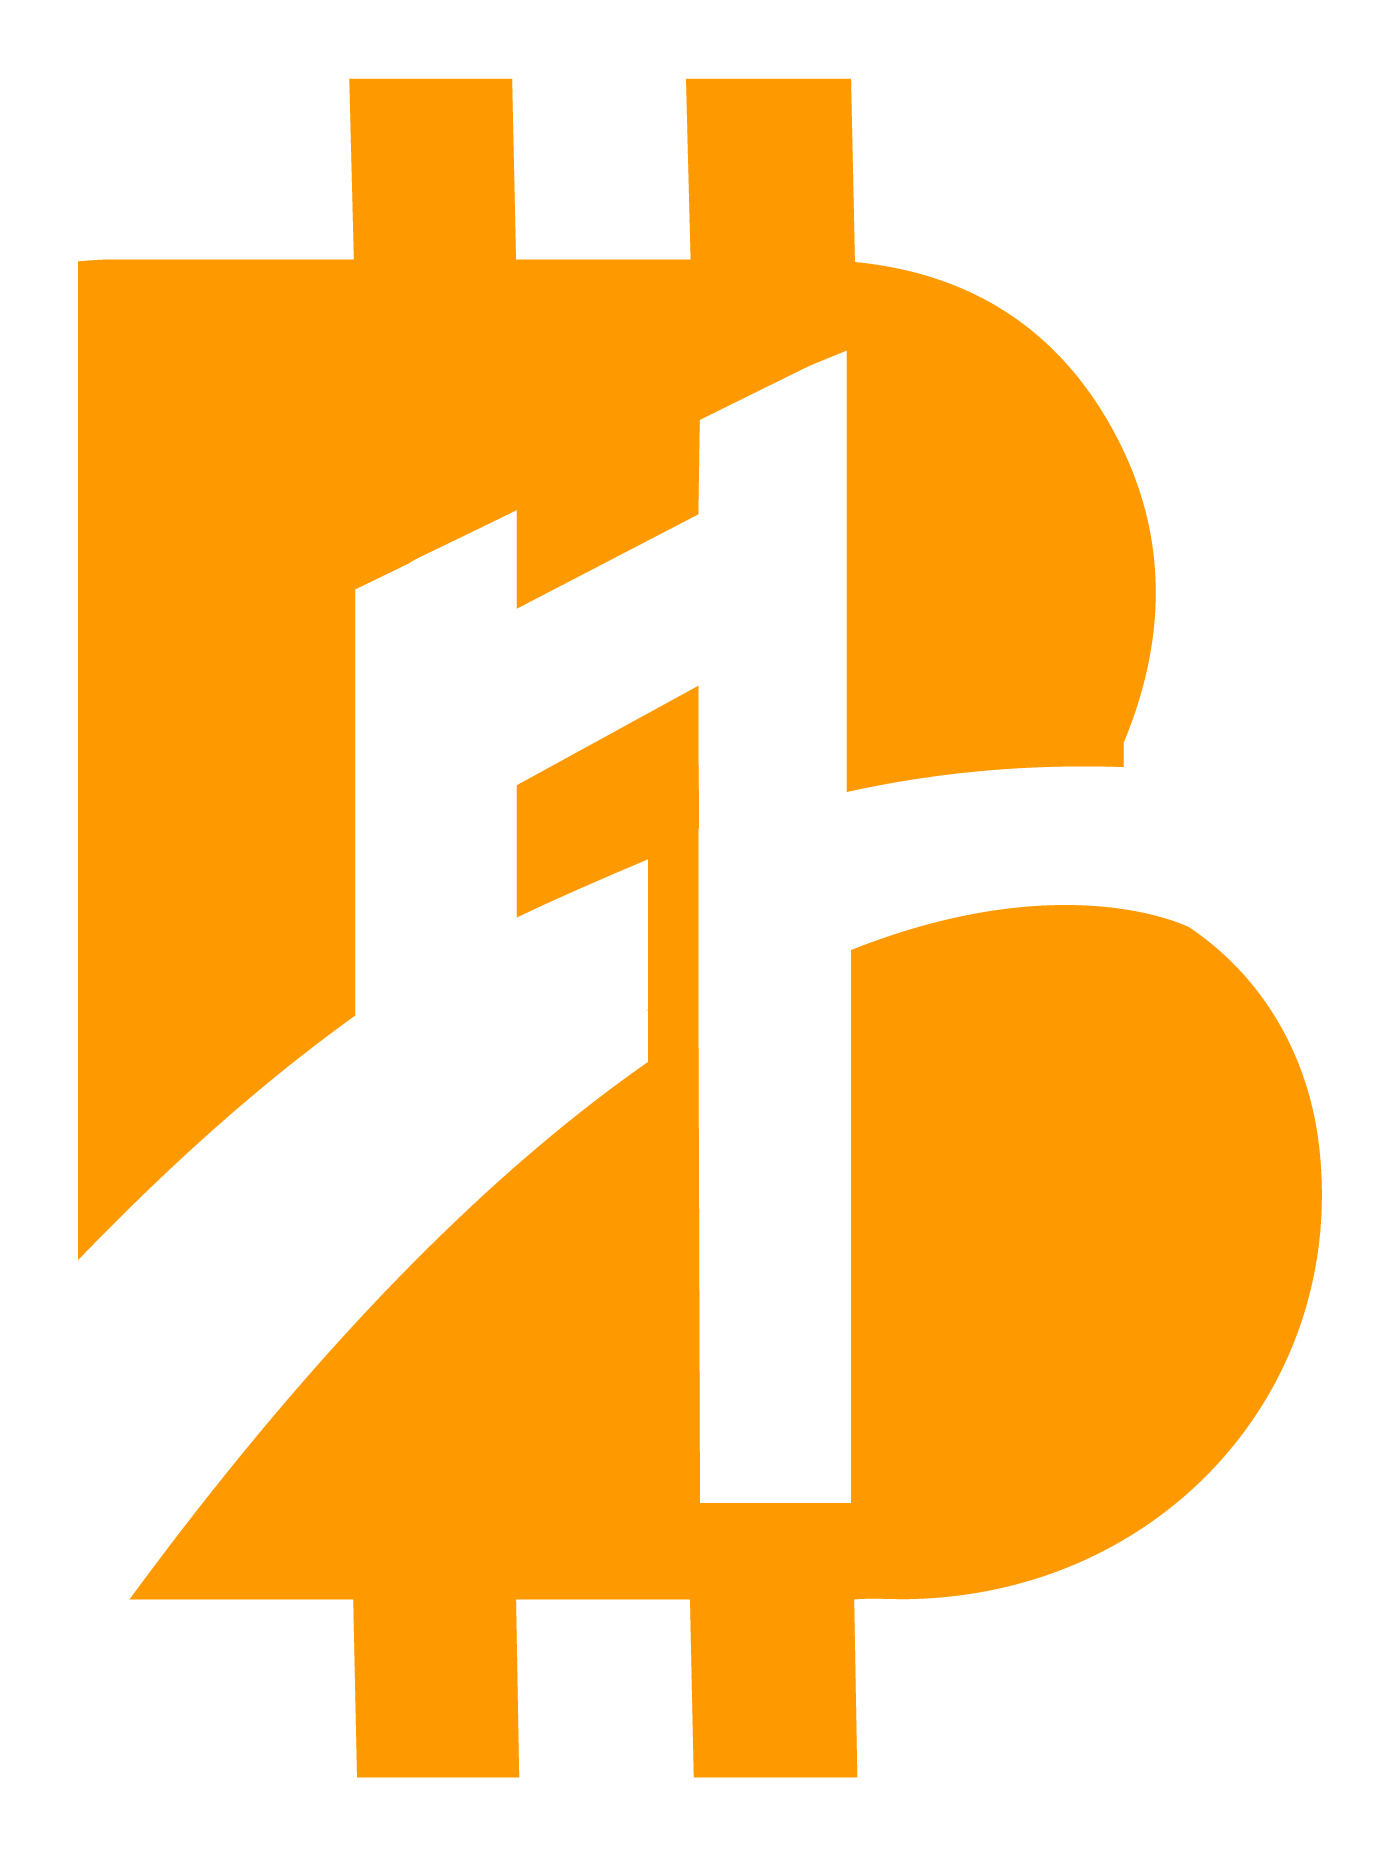 Bitcoin-Bridge